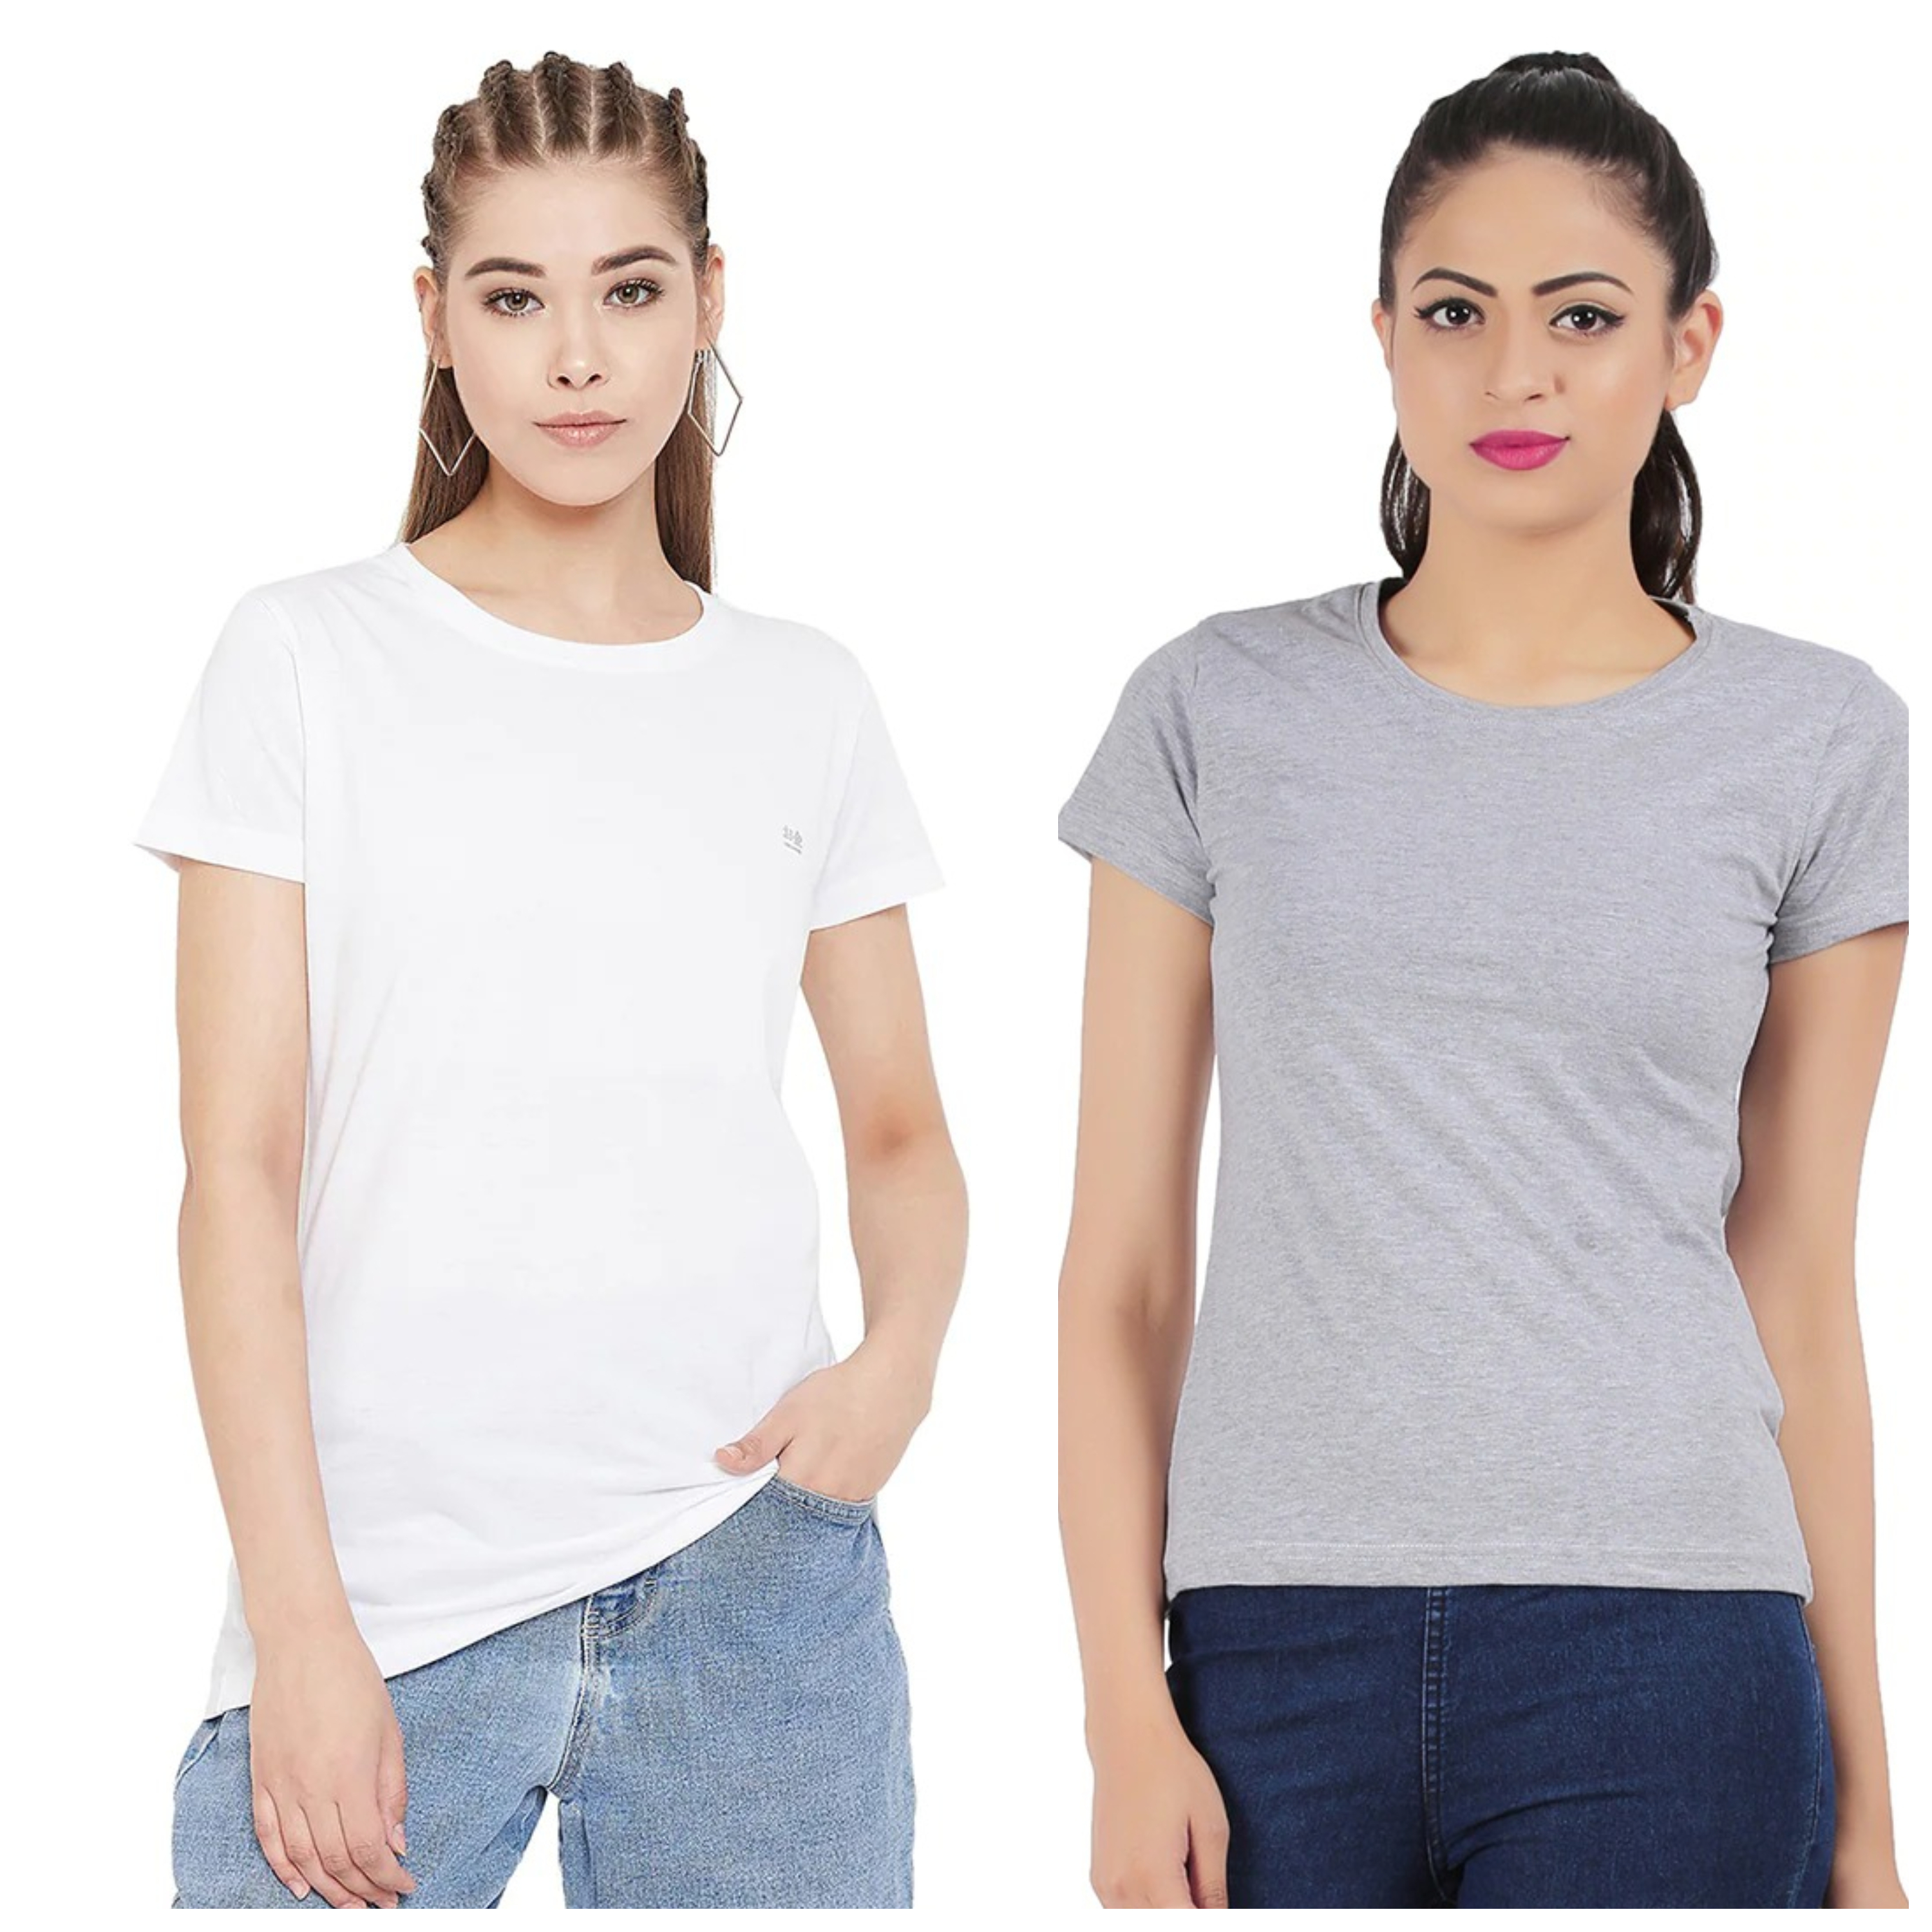 Tijuca Fashion Girls Half Sleeves Grey and White T-Shirts Combo Pack (Multi)